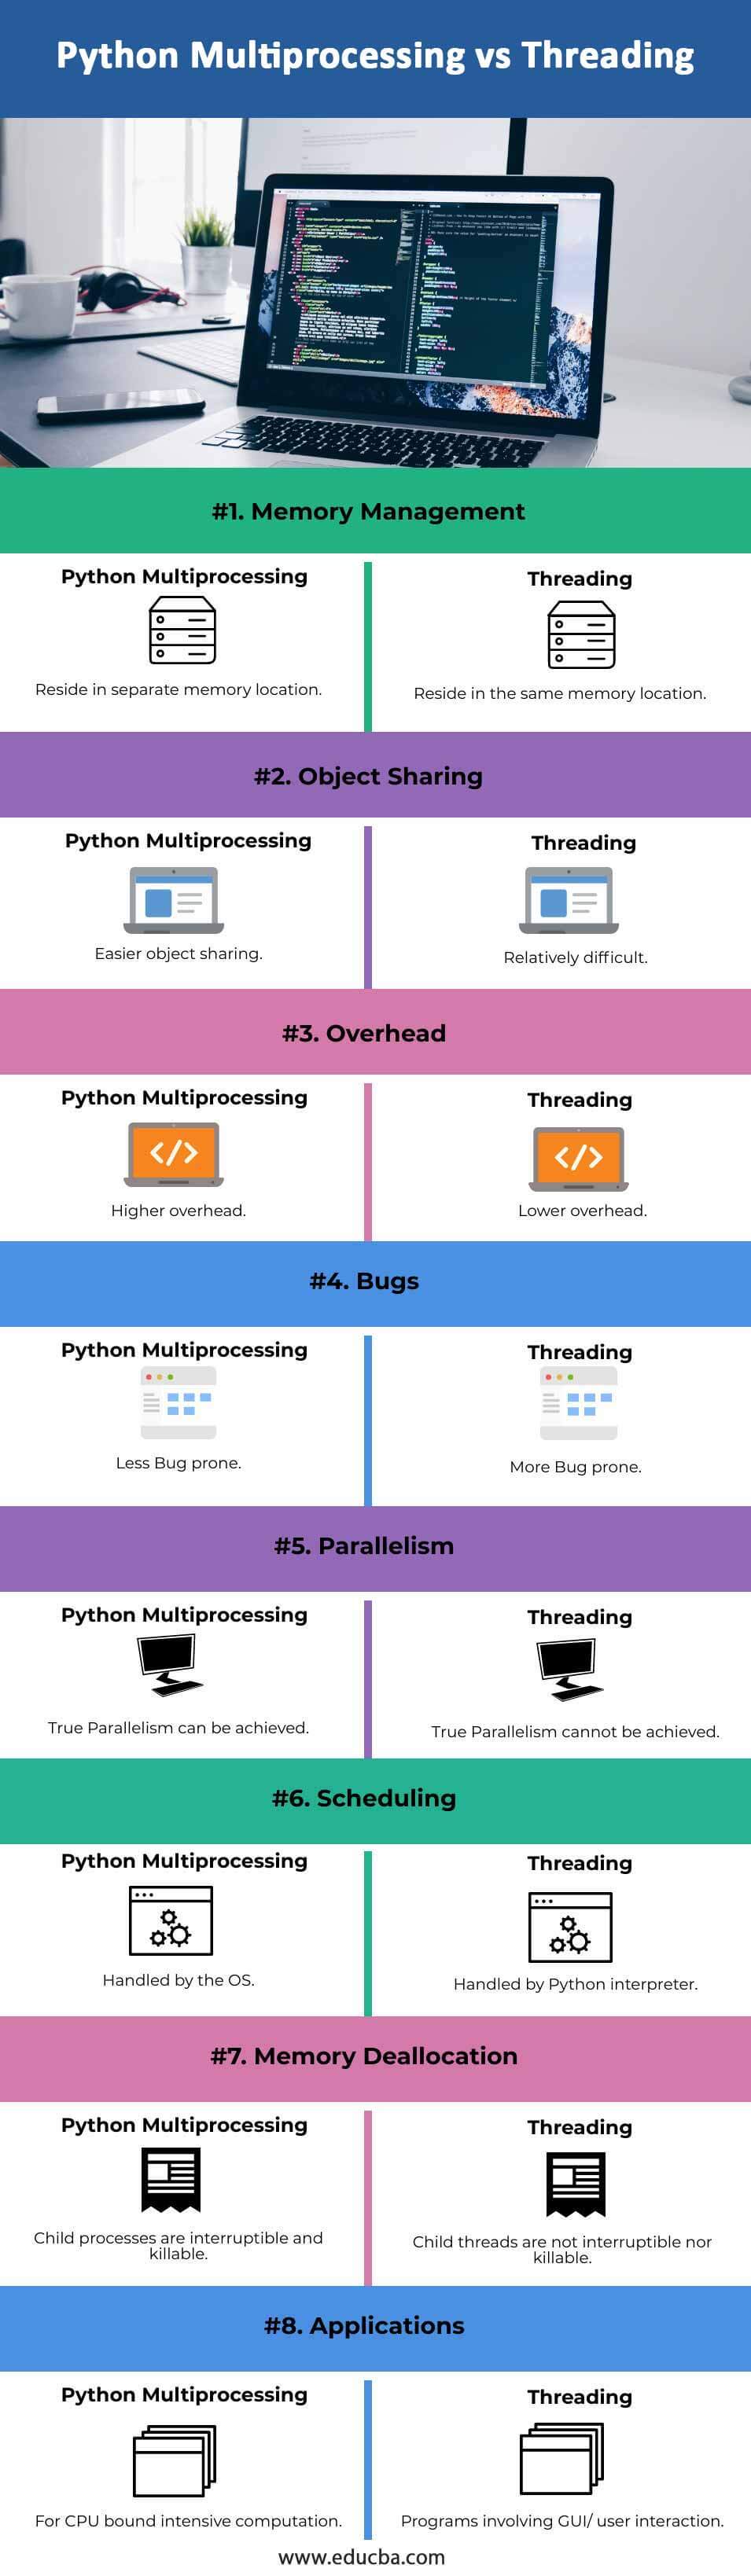 Python-Multiprocessing-vs-Threading-info